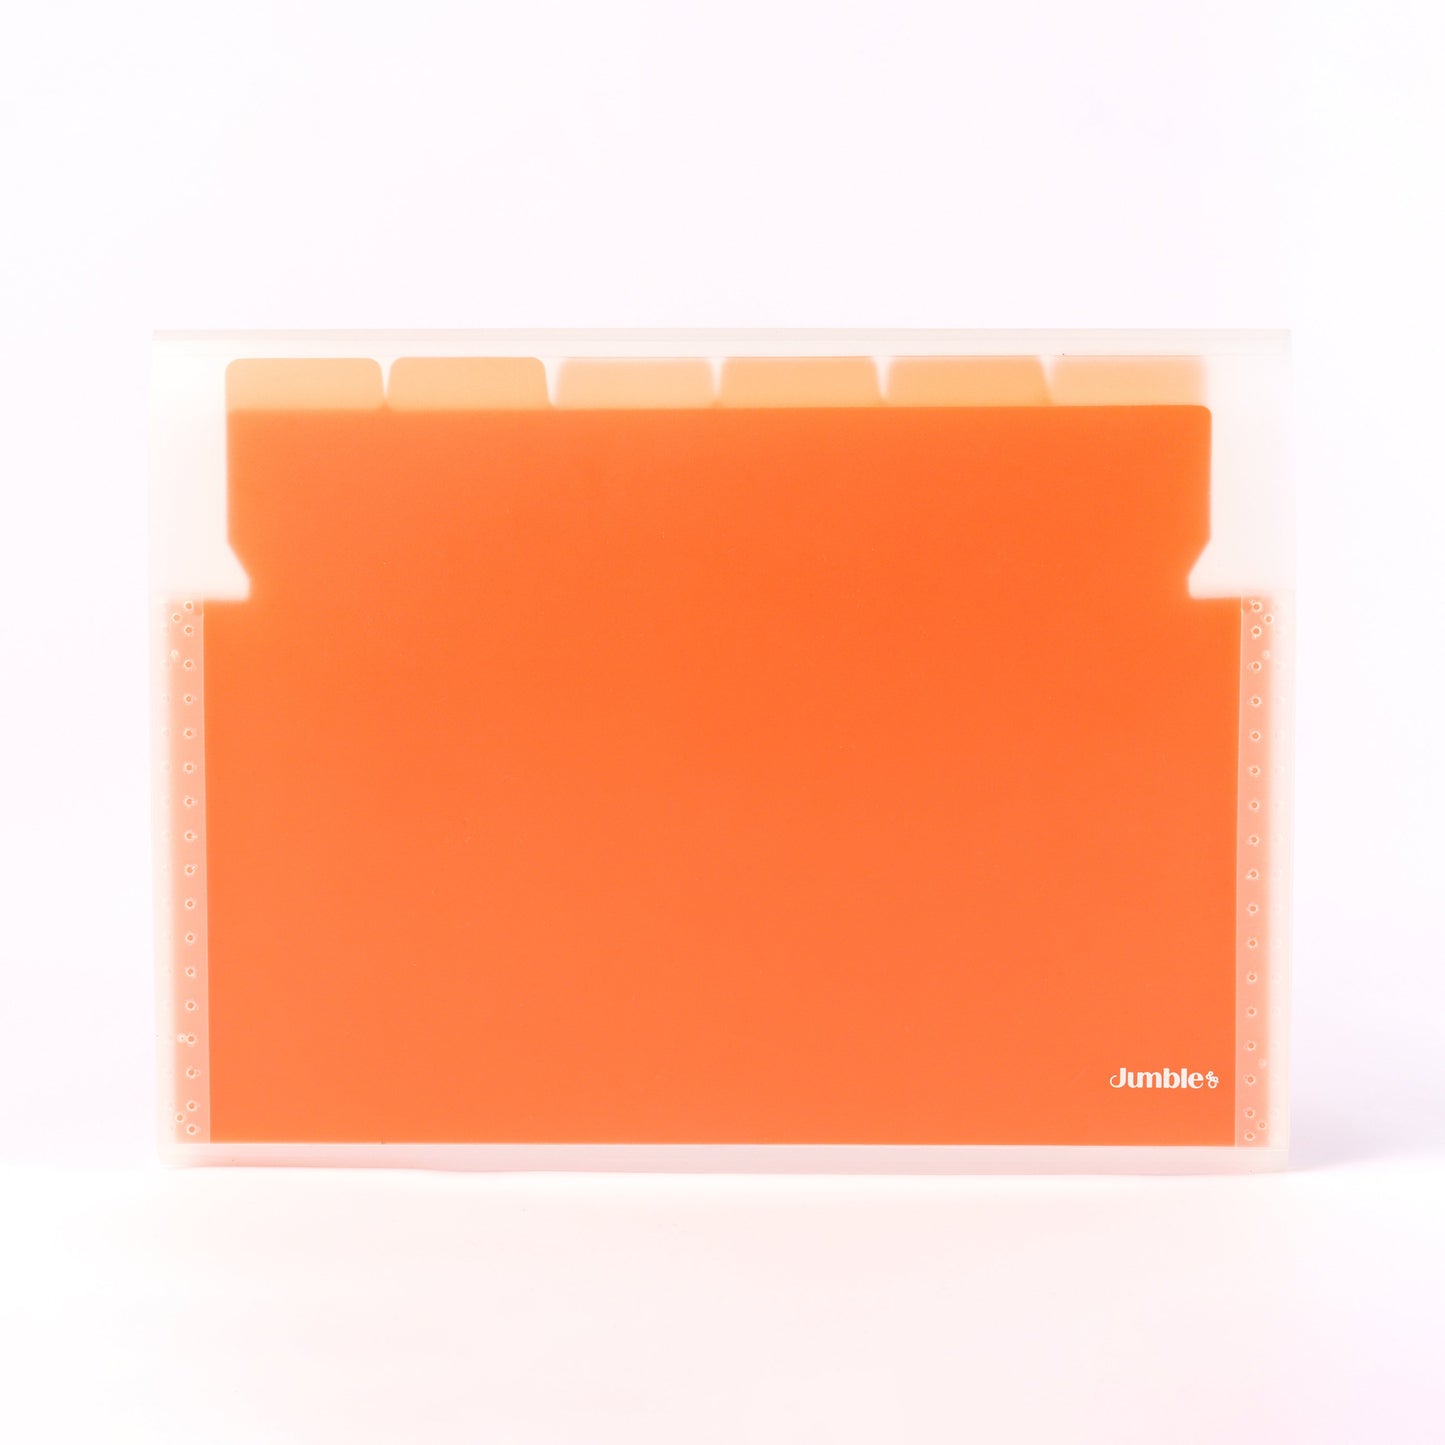 Snuggly A4 Stationery Folder - Burned Out Orange